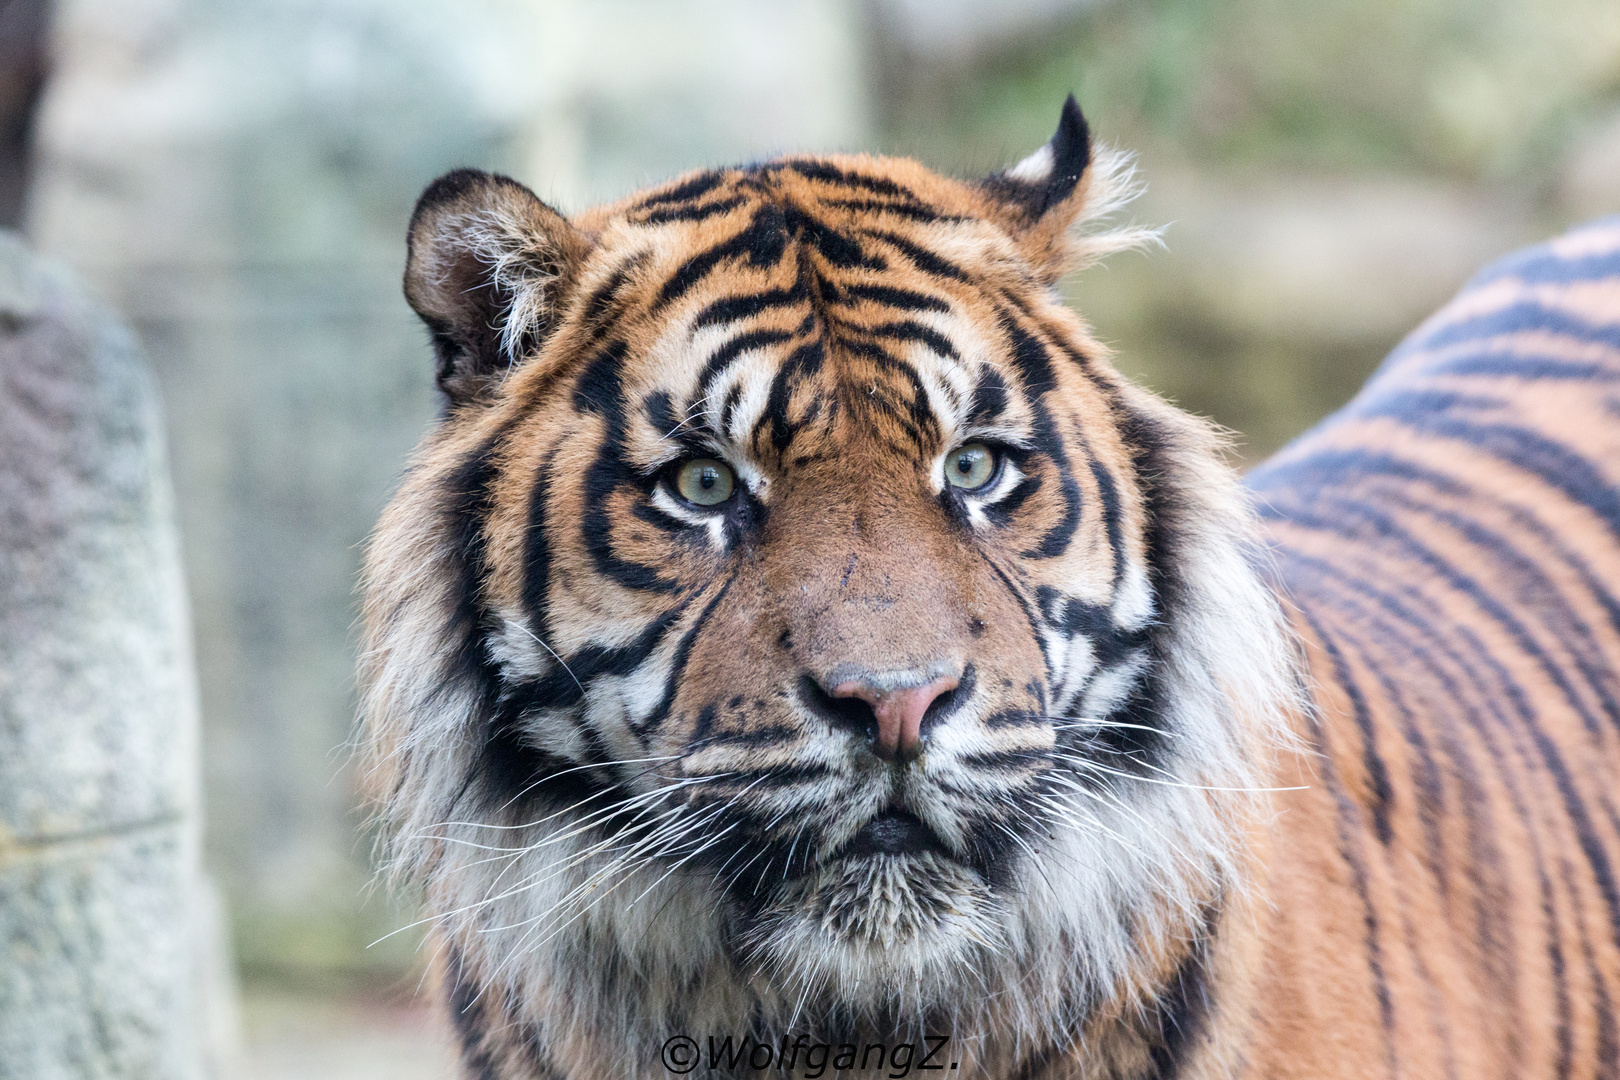 Sumatra - Tiger